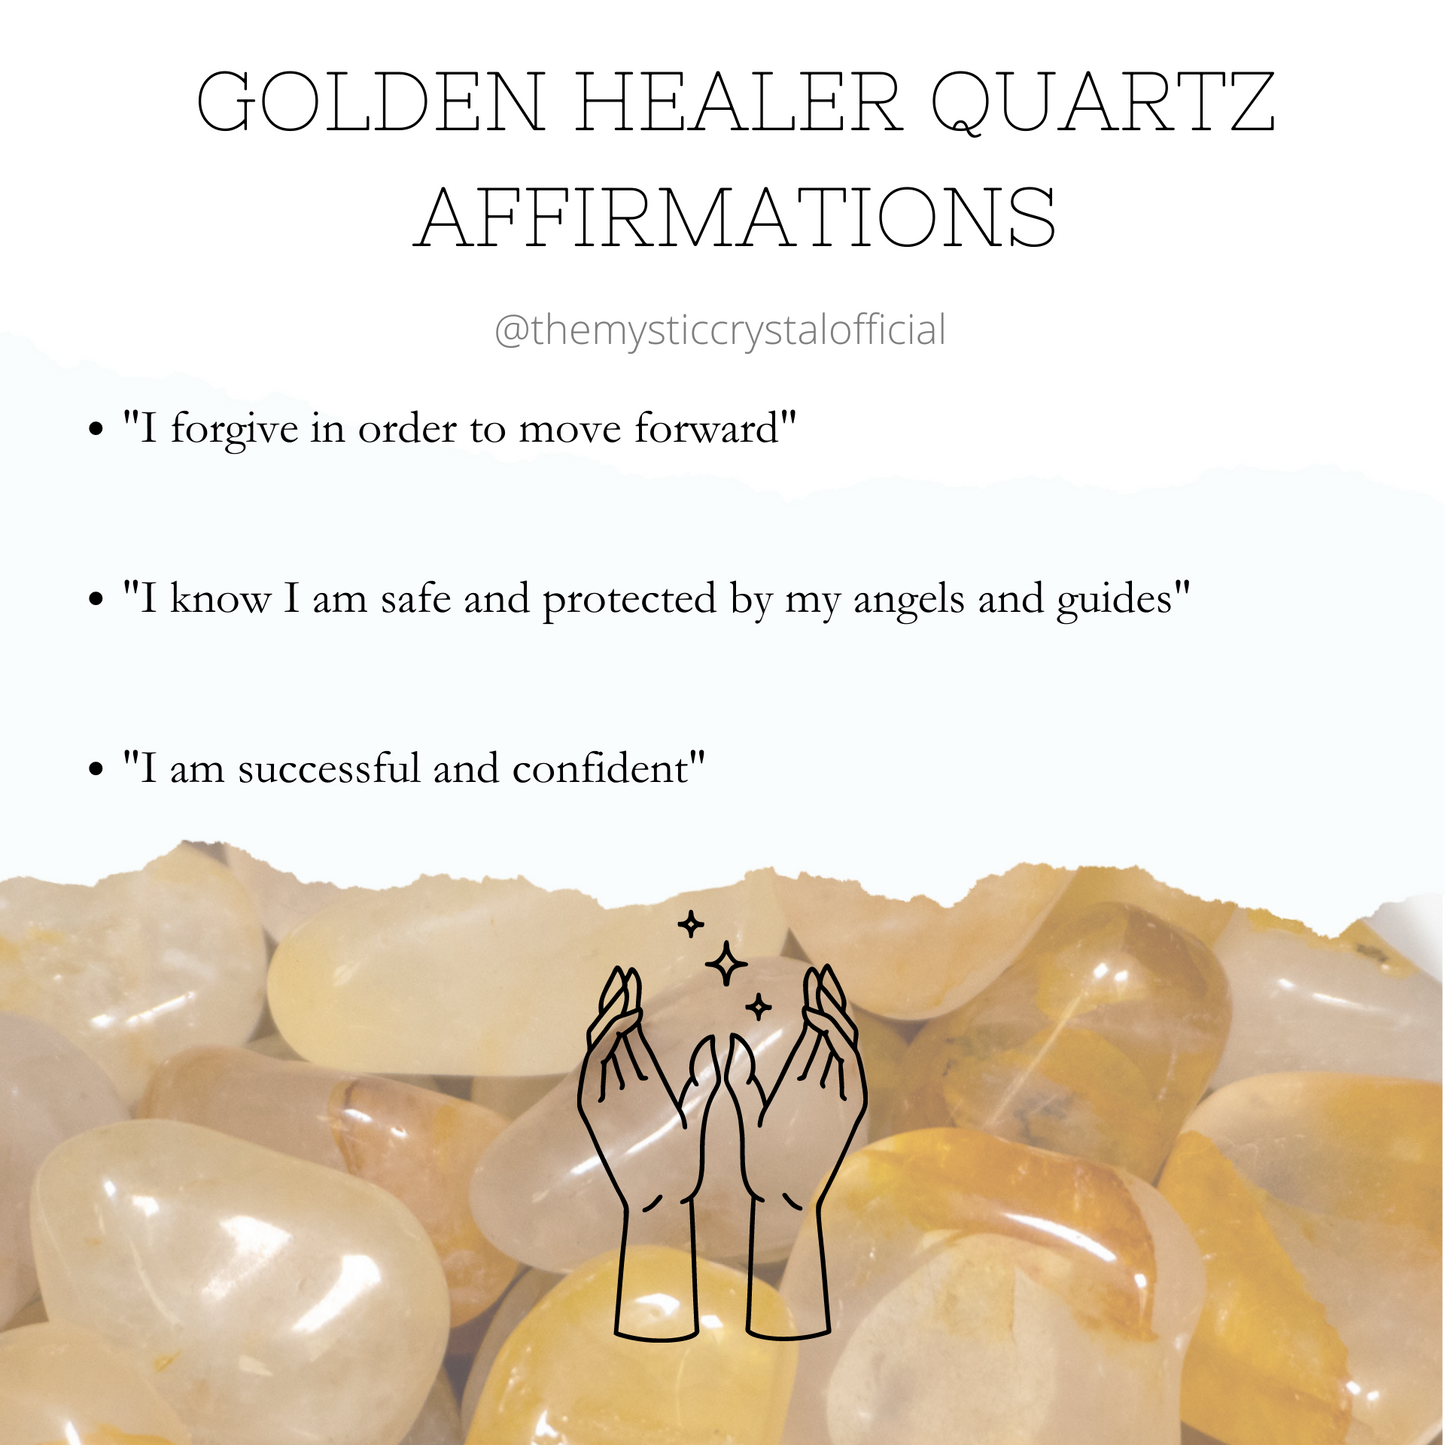 Golden Healer Tower Point Crystal